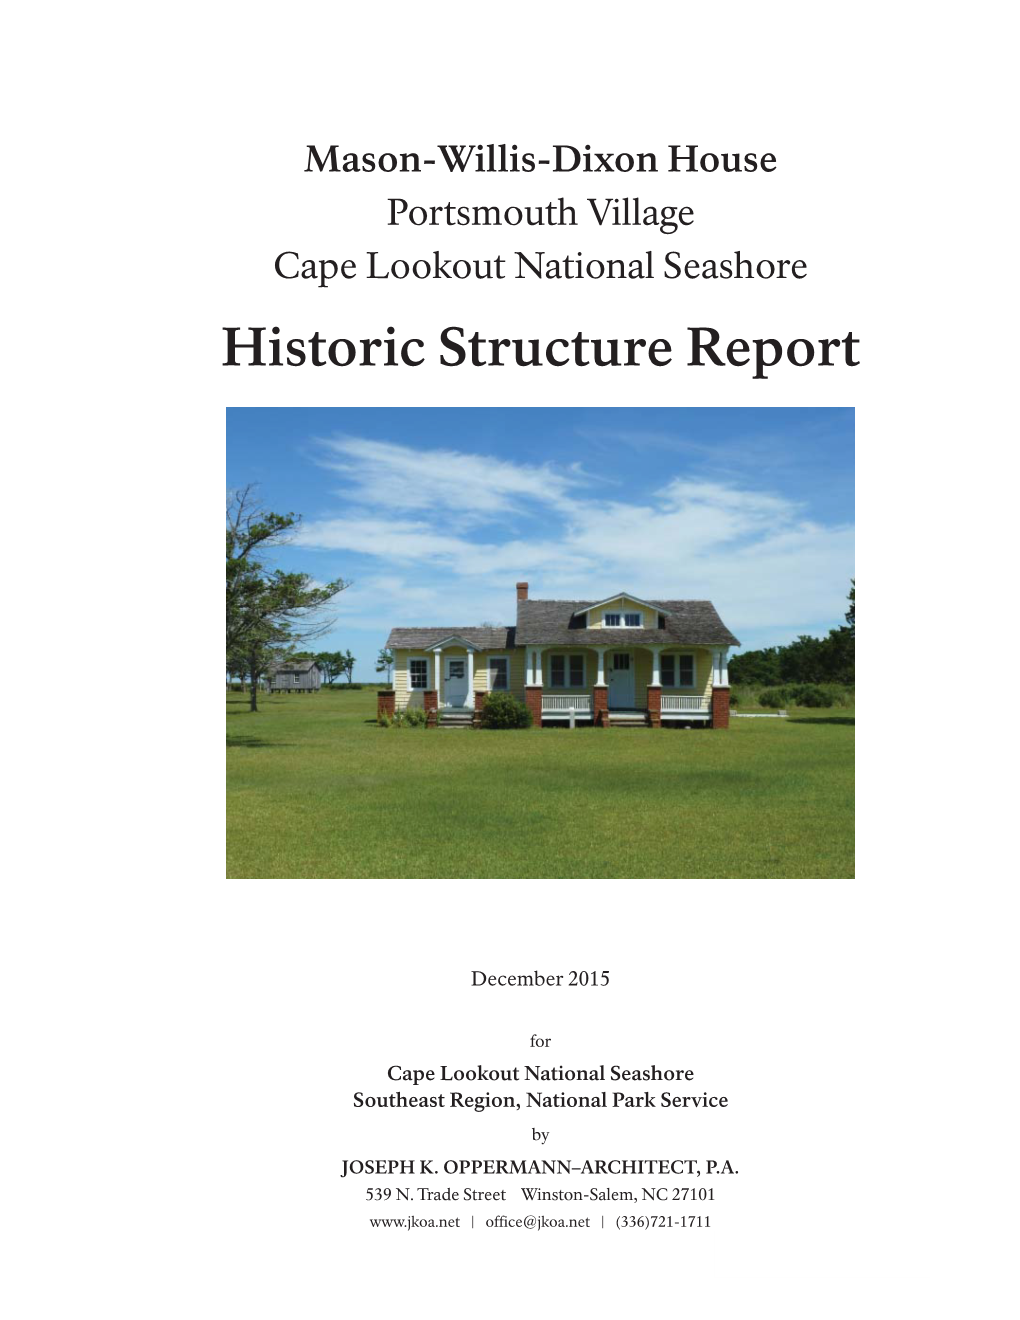 Historic Structure Report: Mason-Willis-Dixon House, Portsmouth Village, Cape Lookout National Seashore